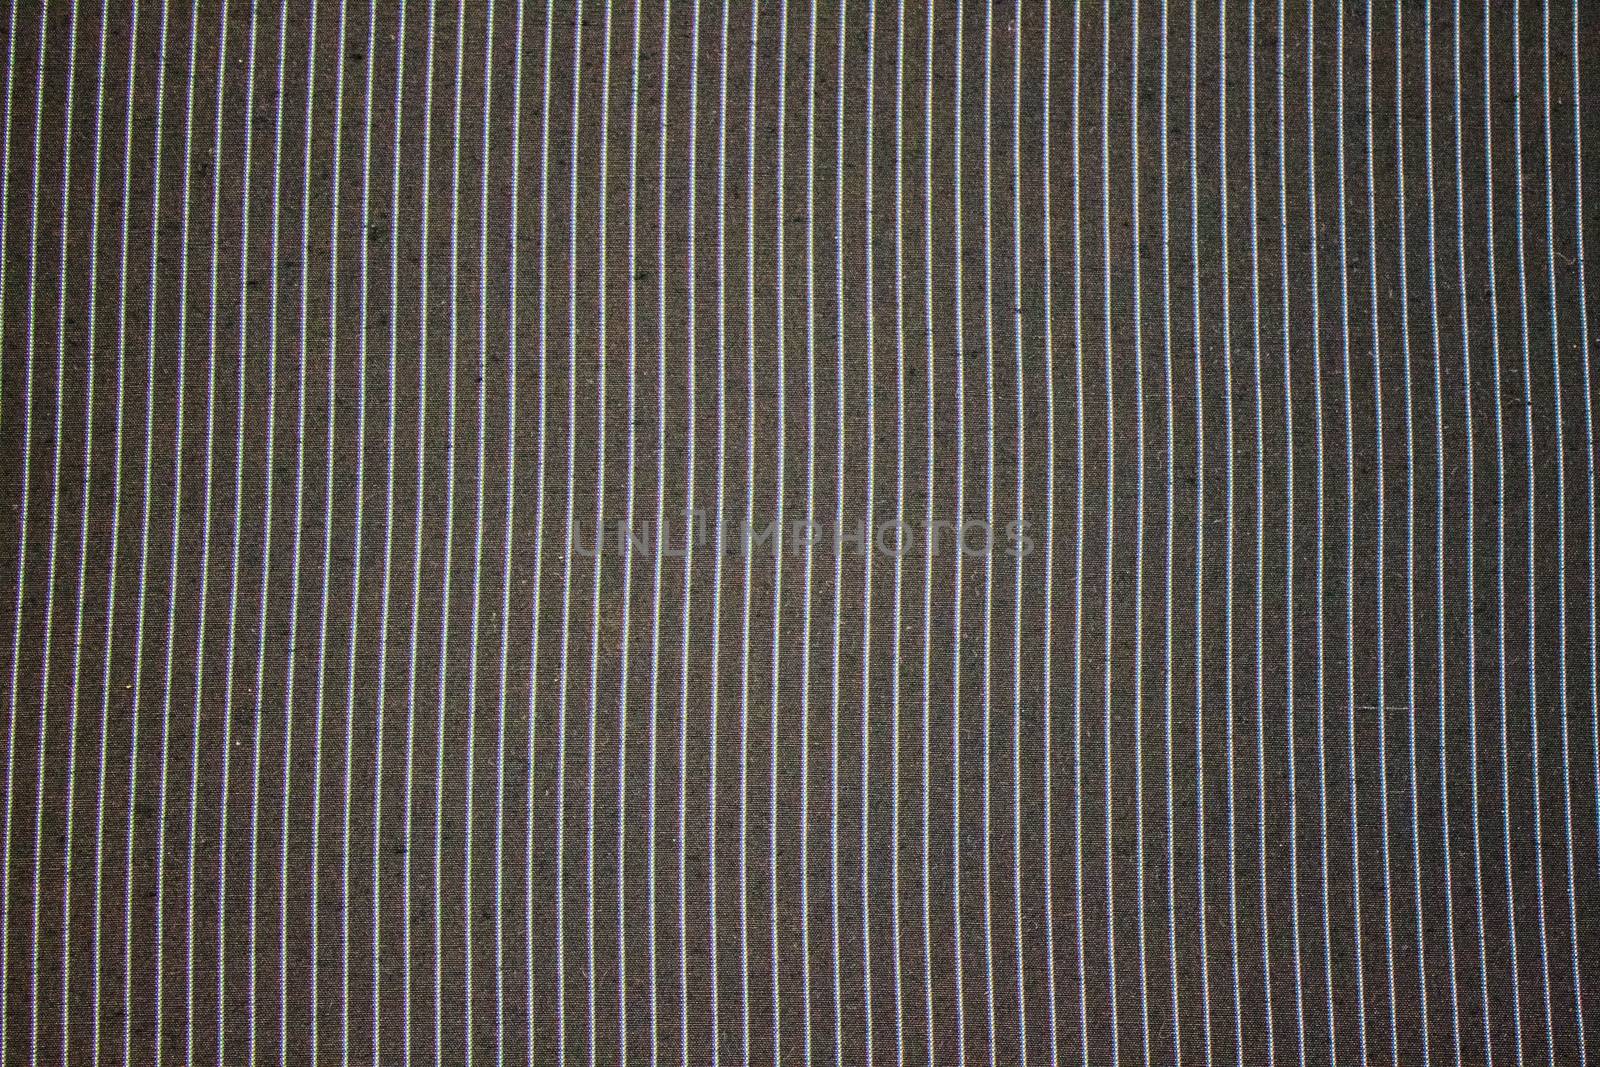 black striped background by Ukid123